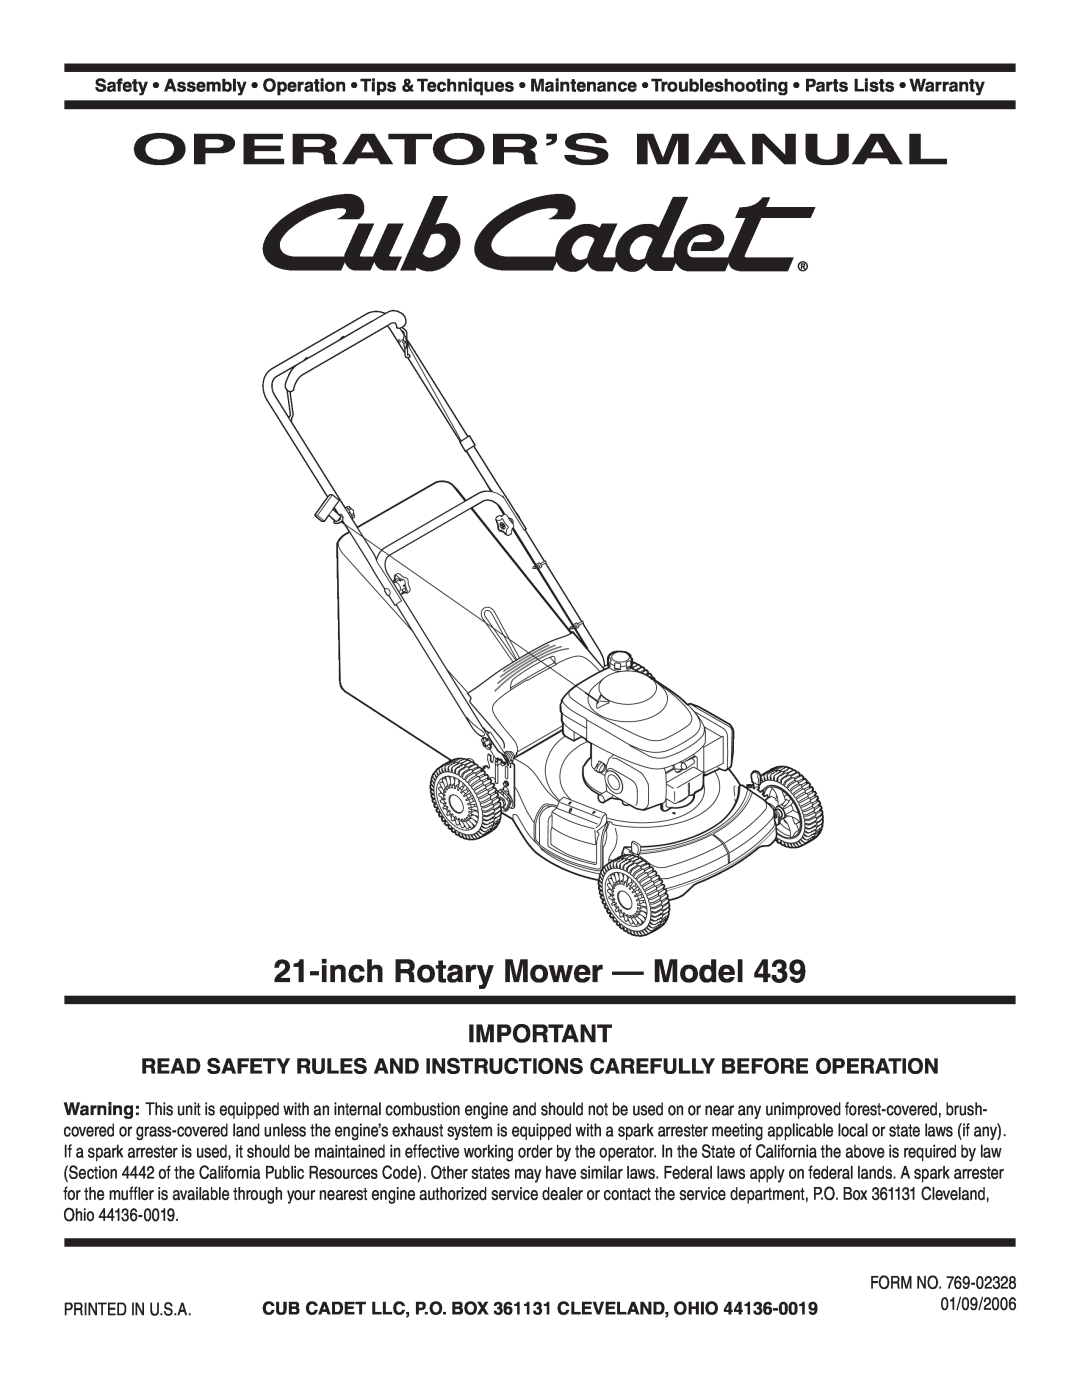 Cub Cadet 439 warranty Operator’S Manual, inch Rotary Mower - Model, 01/09/2006 